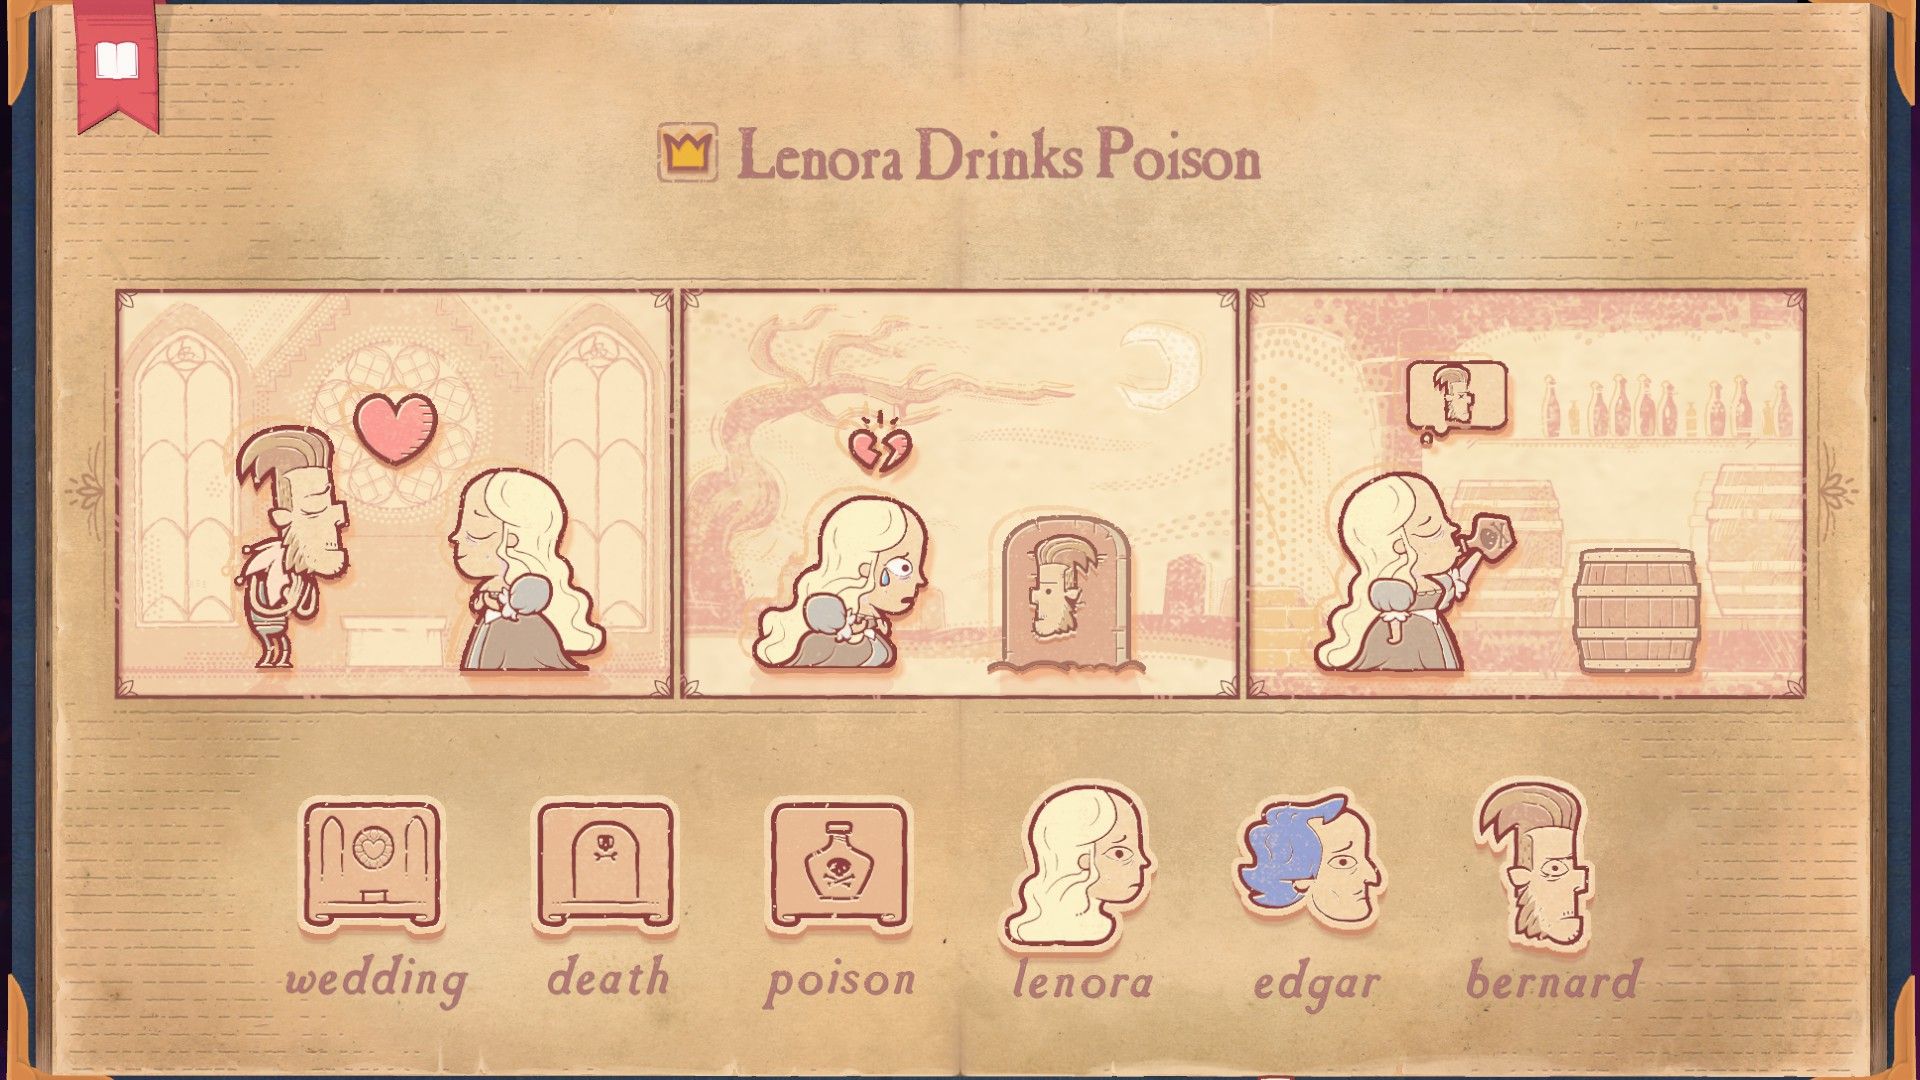 The solution for the Poison scenario in Storyteller, showing Lenora drinking poison.